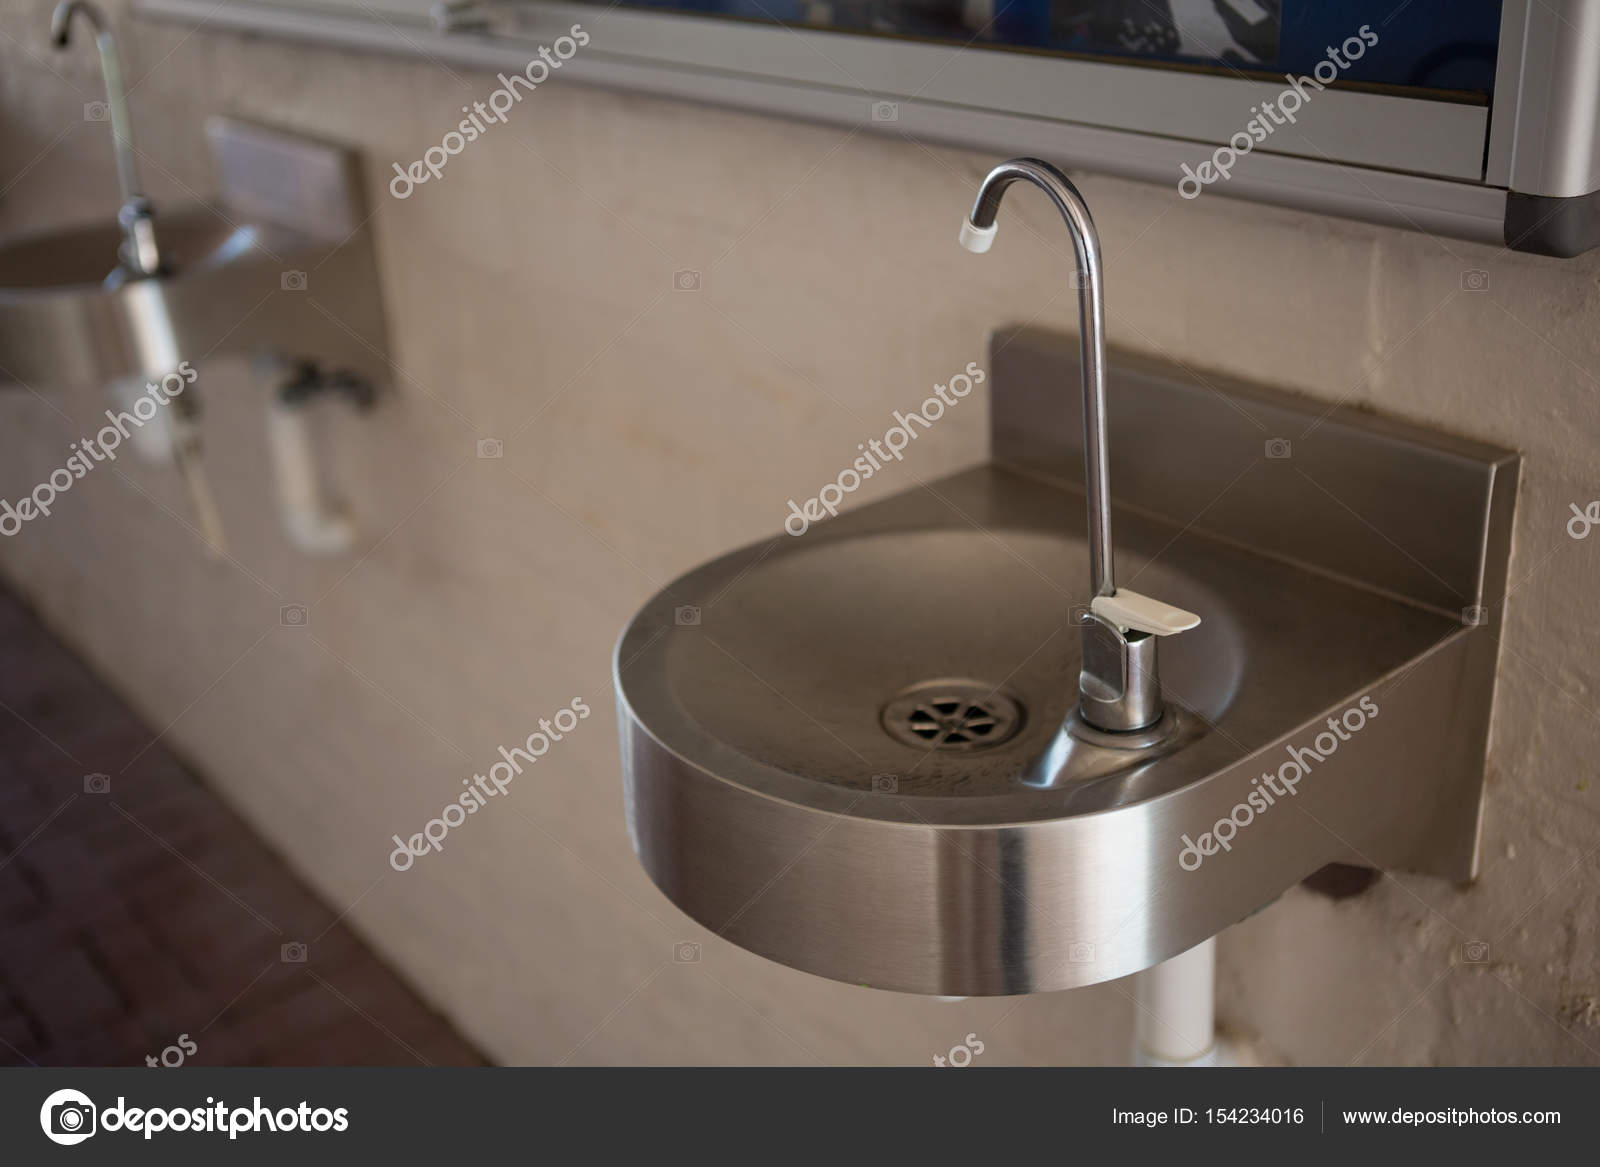 Drinking Water Faucet On Sink Stock Photo C Wavebreakmedia